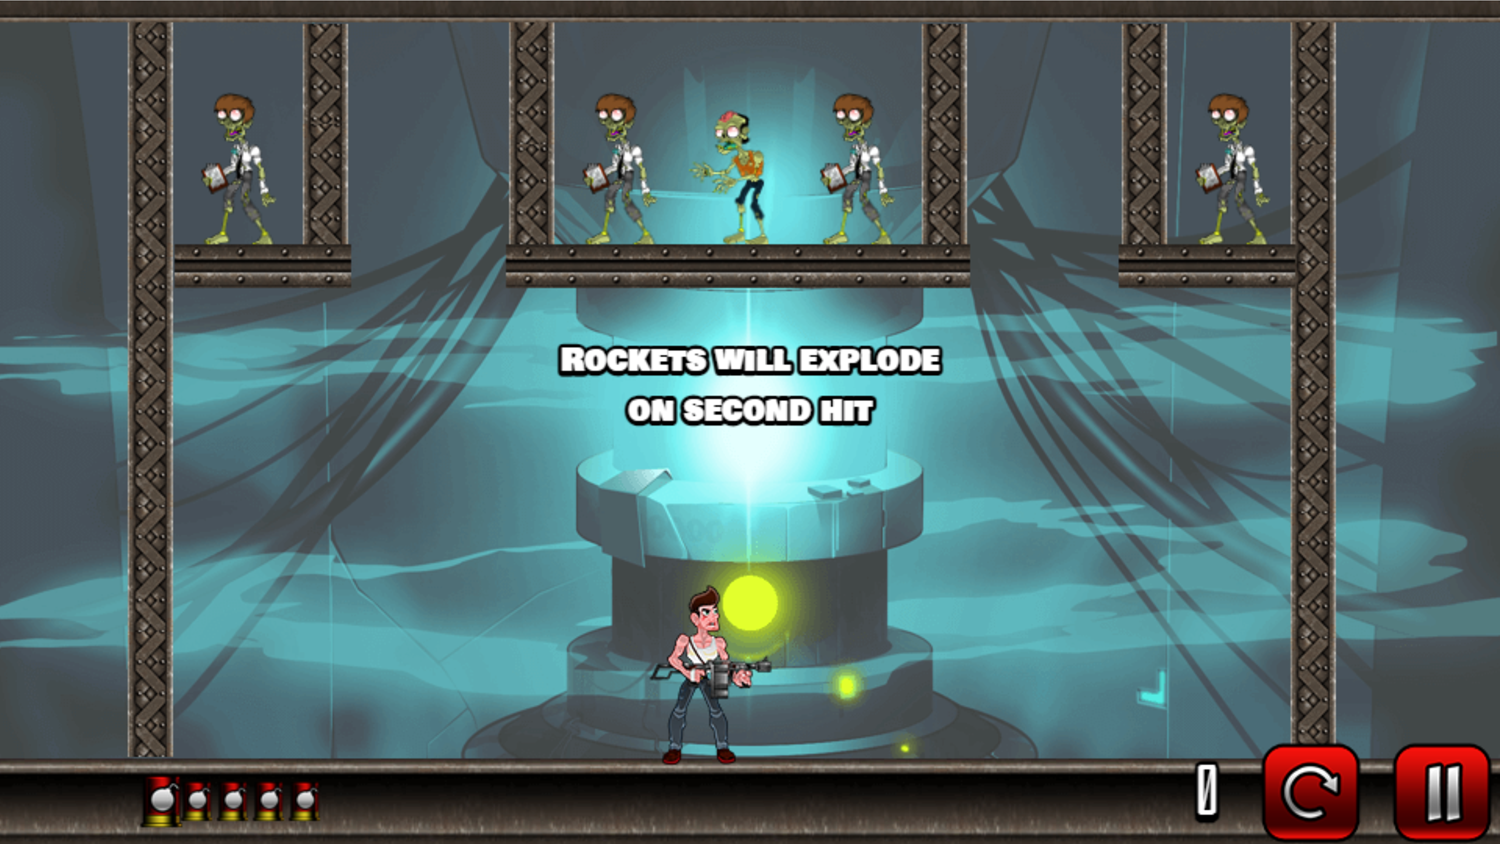 Stupid Zombies 2 Game Rocket Exploding Instructions Screen Screenshot.